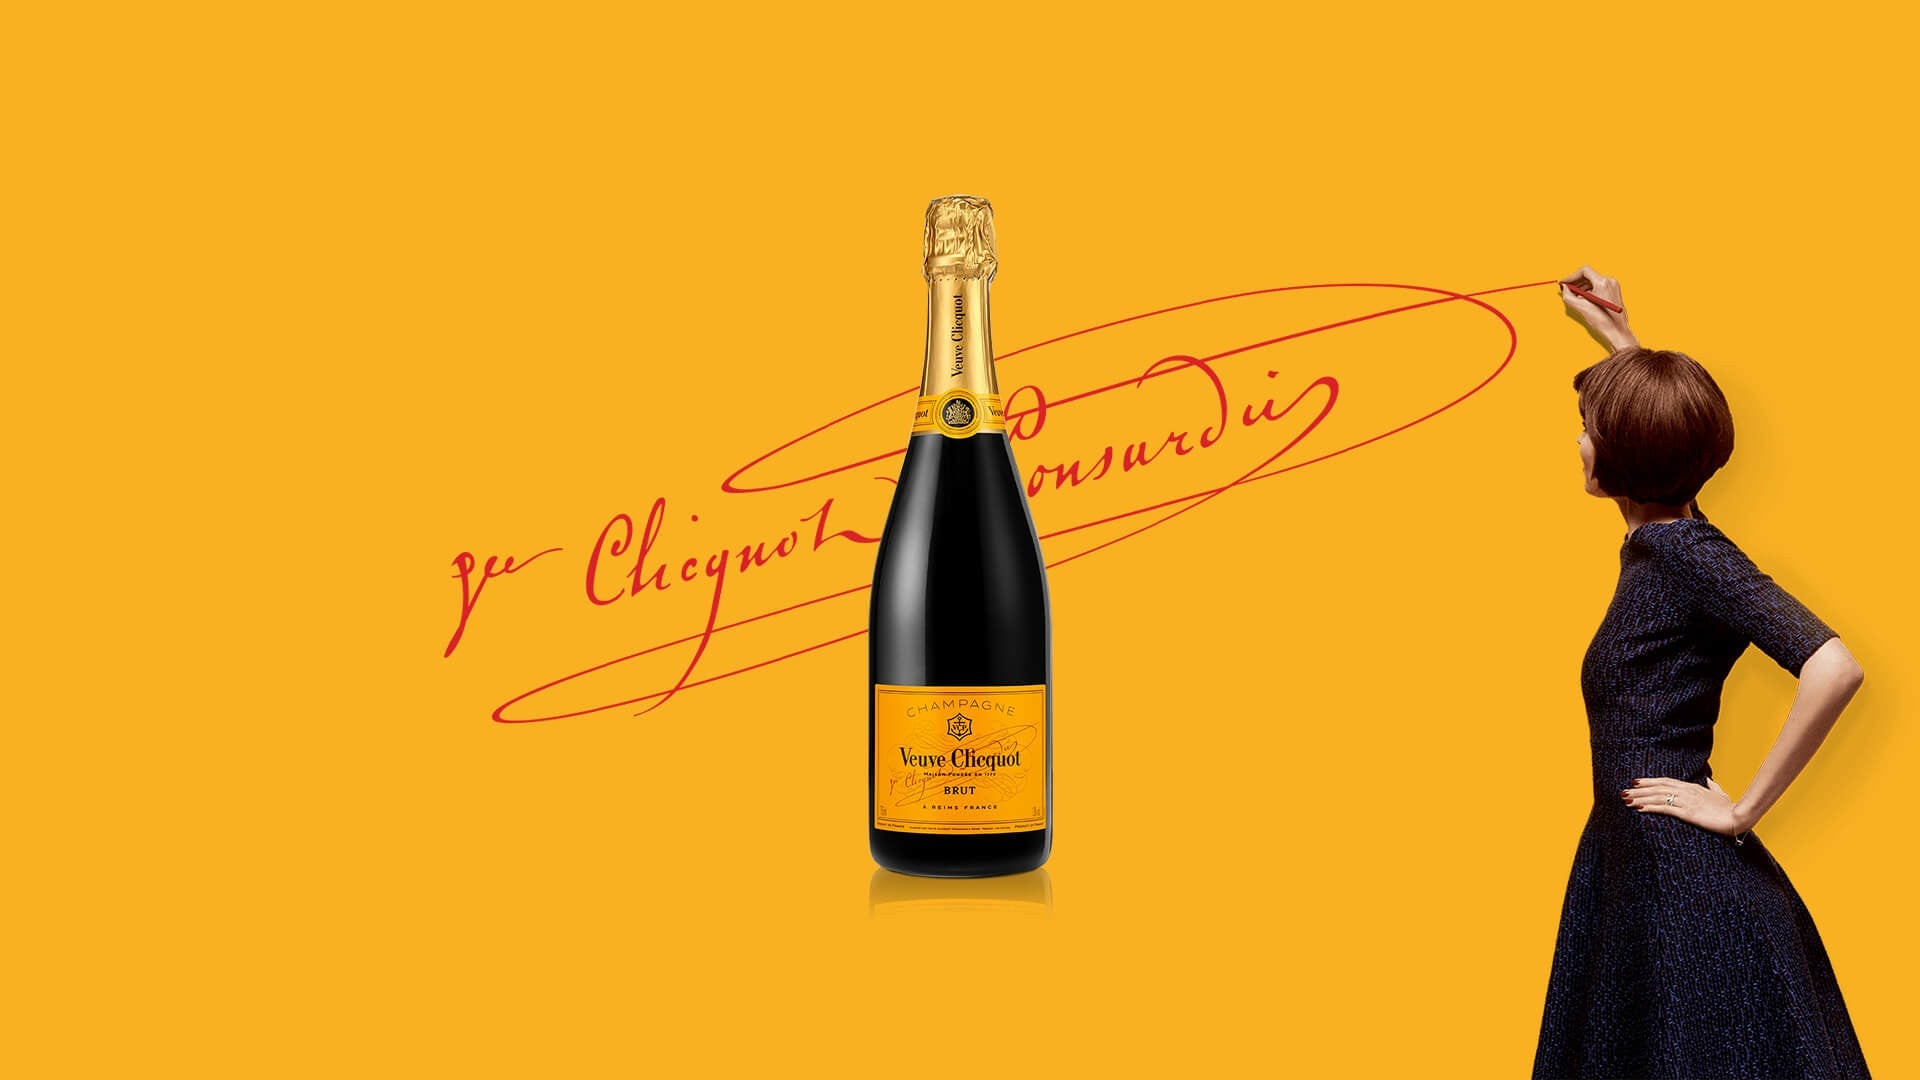 Veuve Clicquot Champagne Facts